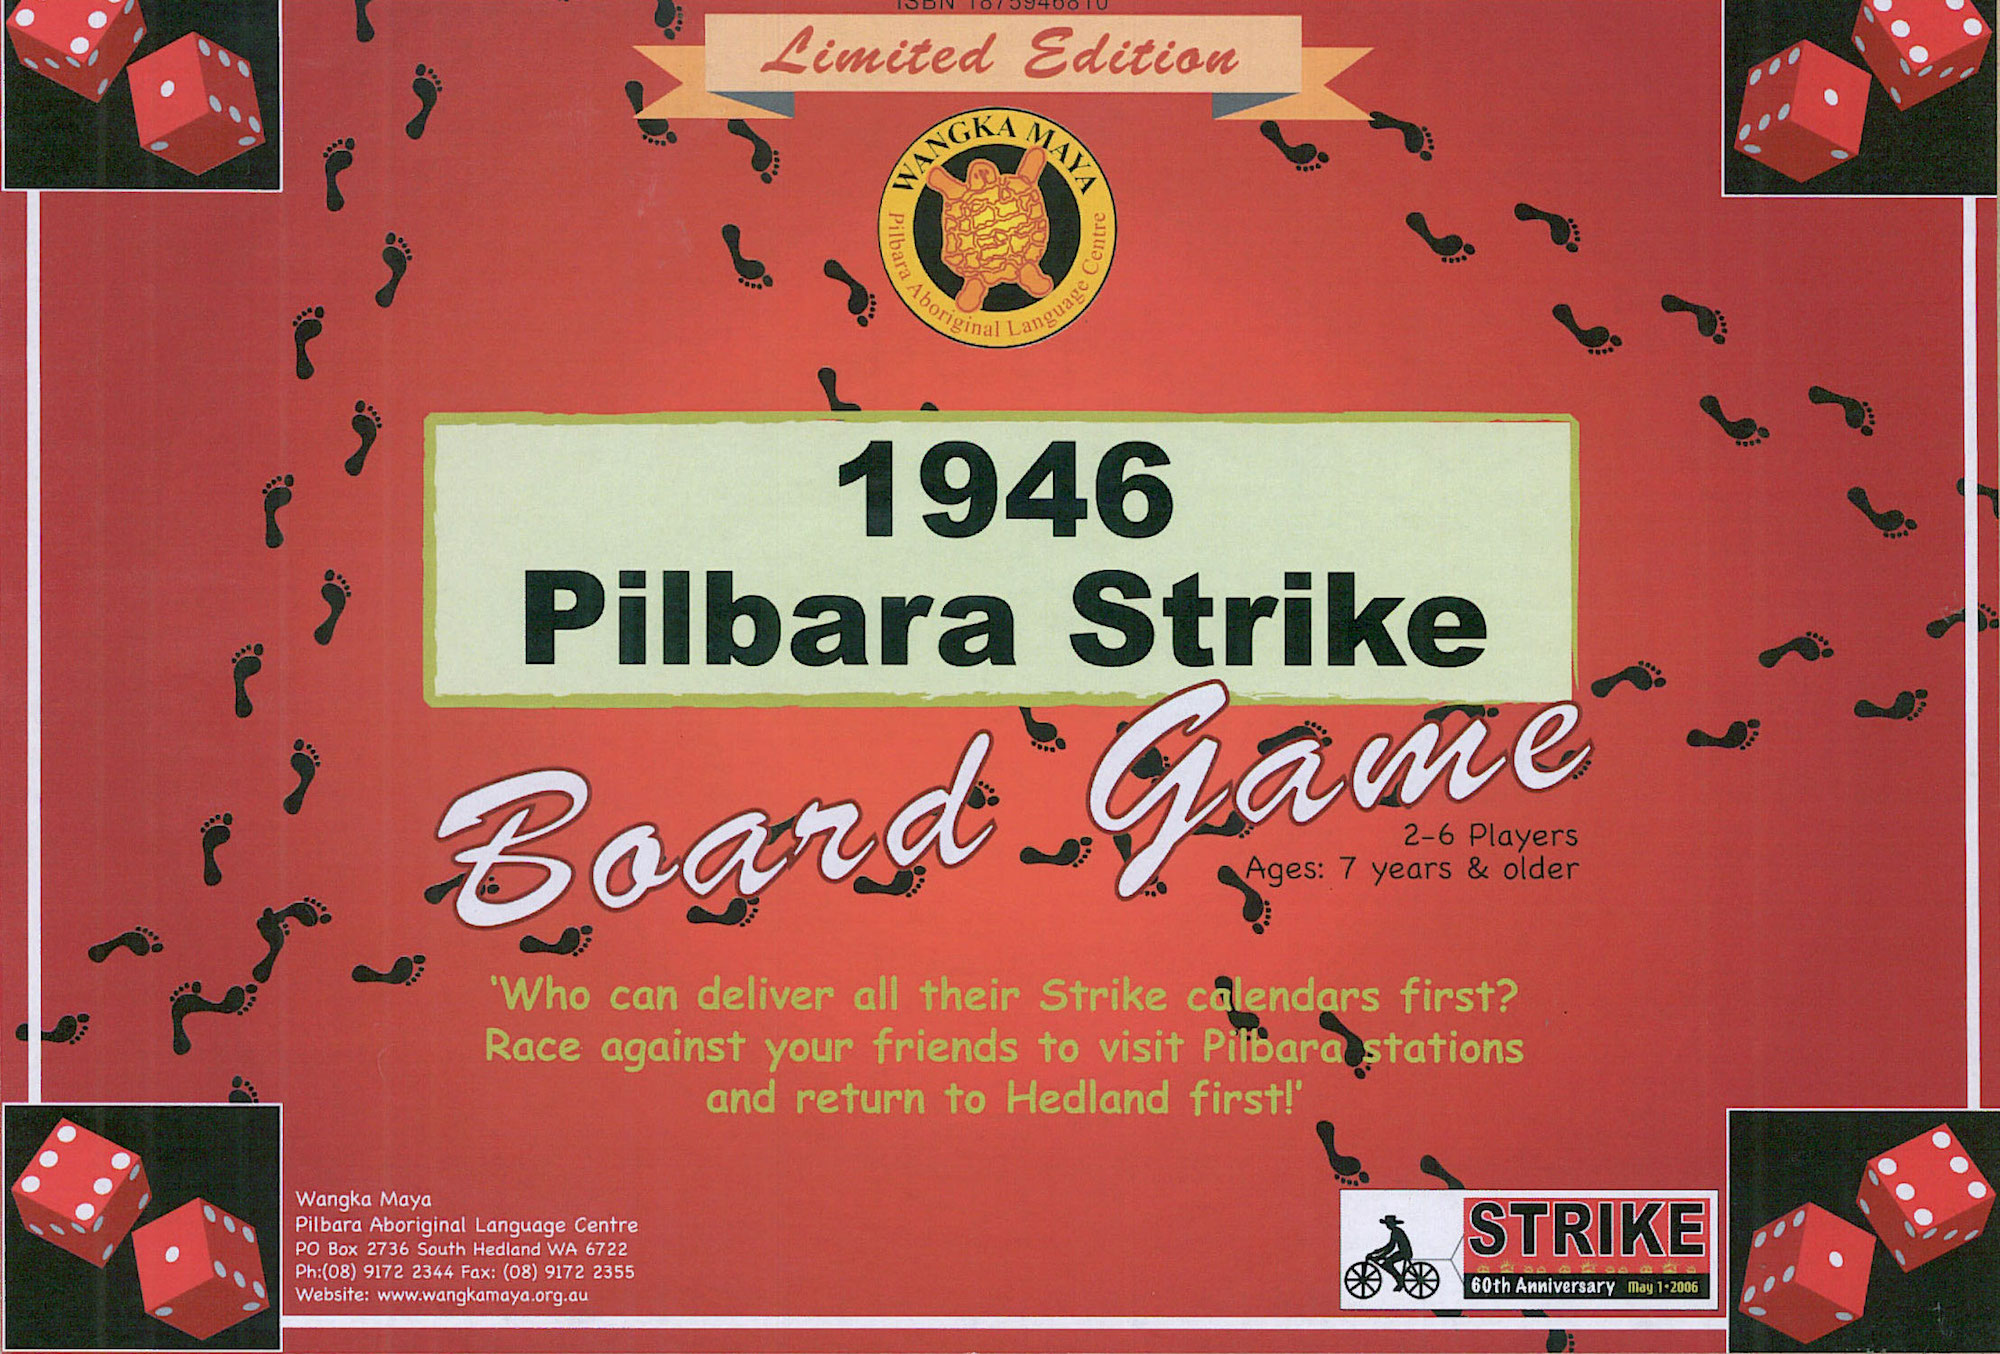 The 1946 Pilbara Strike Board Game Cover